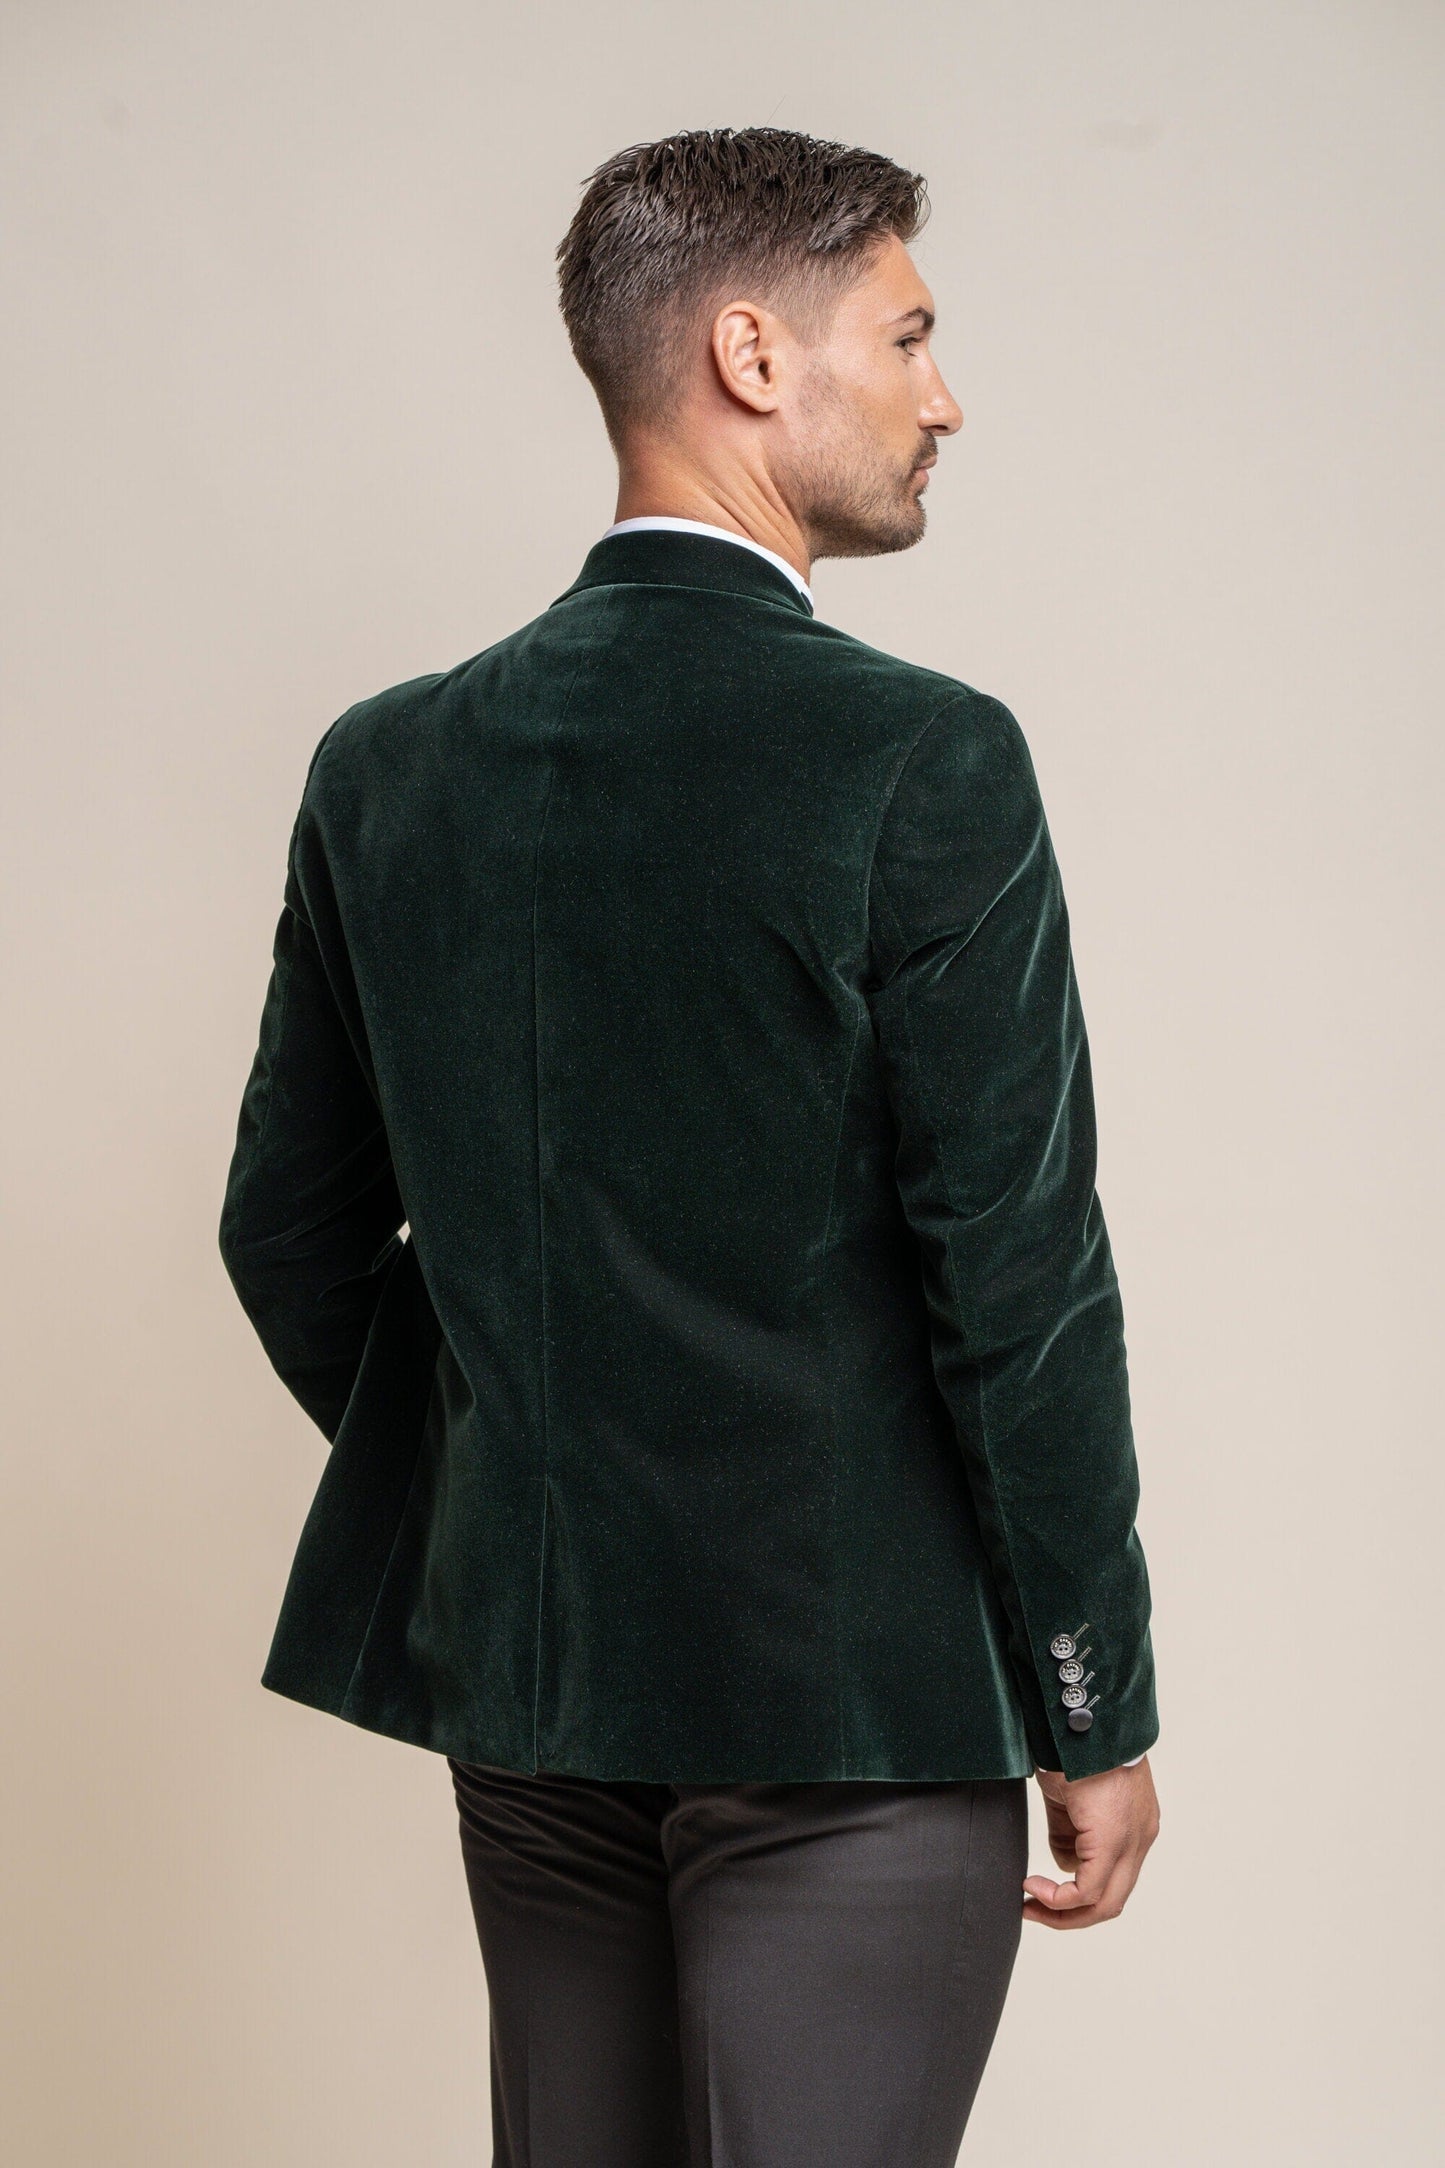 Forest Green Velvet Blazer - STOCK CLEARANCE - Blazers & Jackets Sale - 